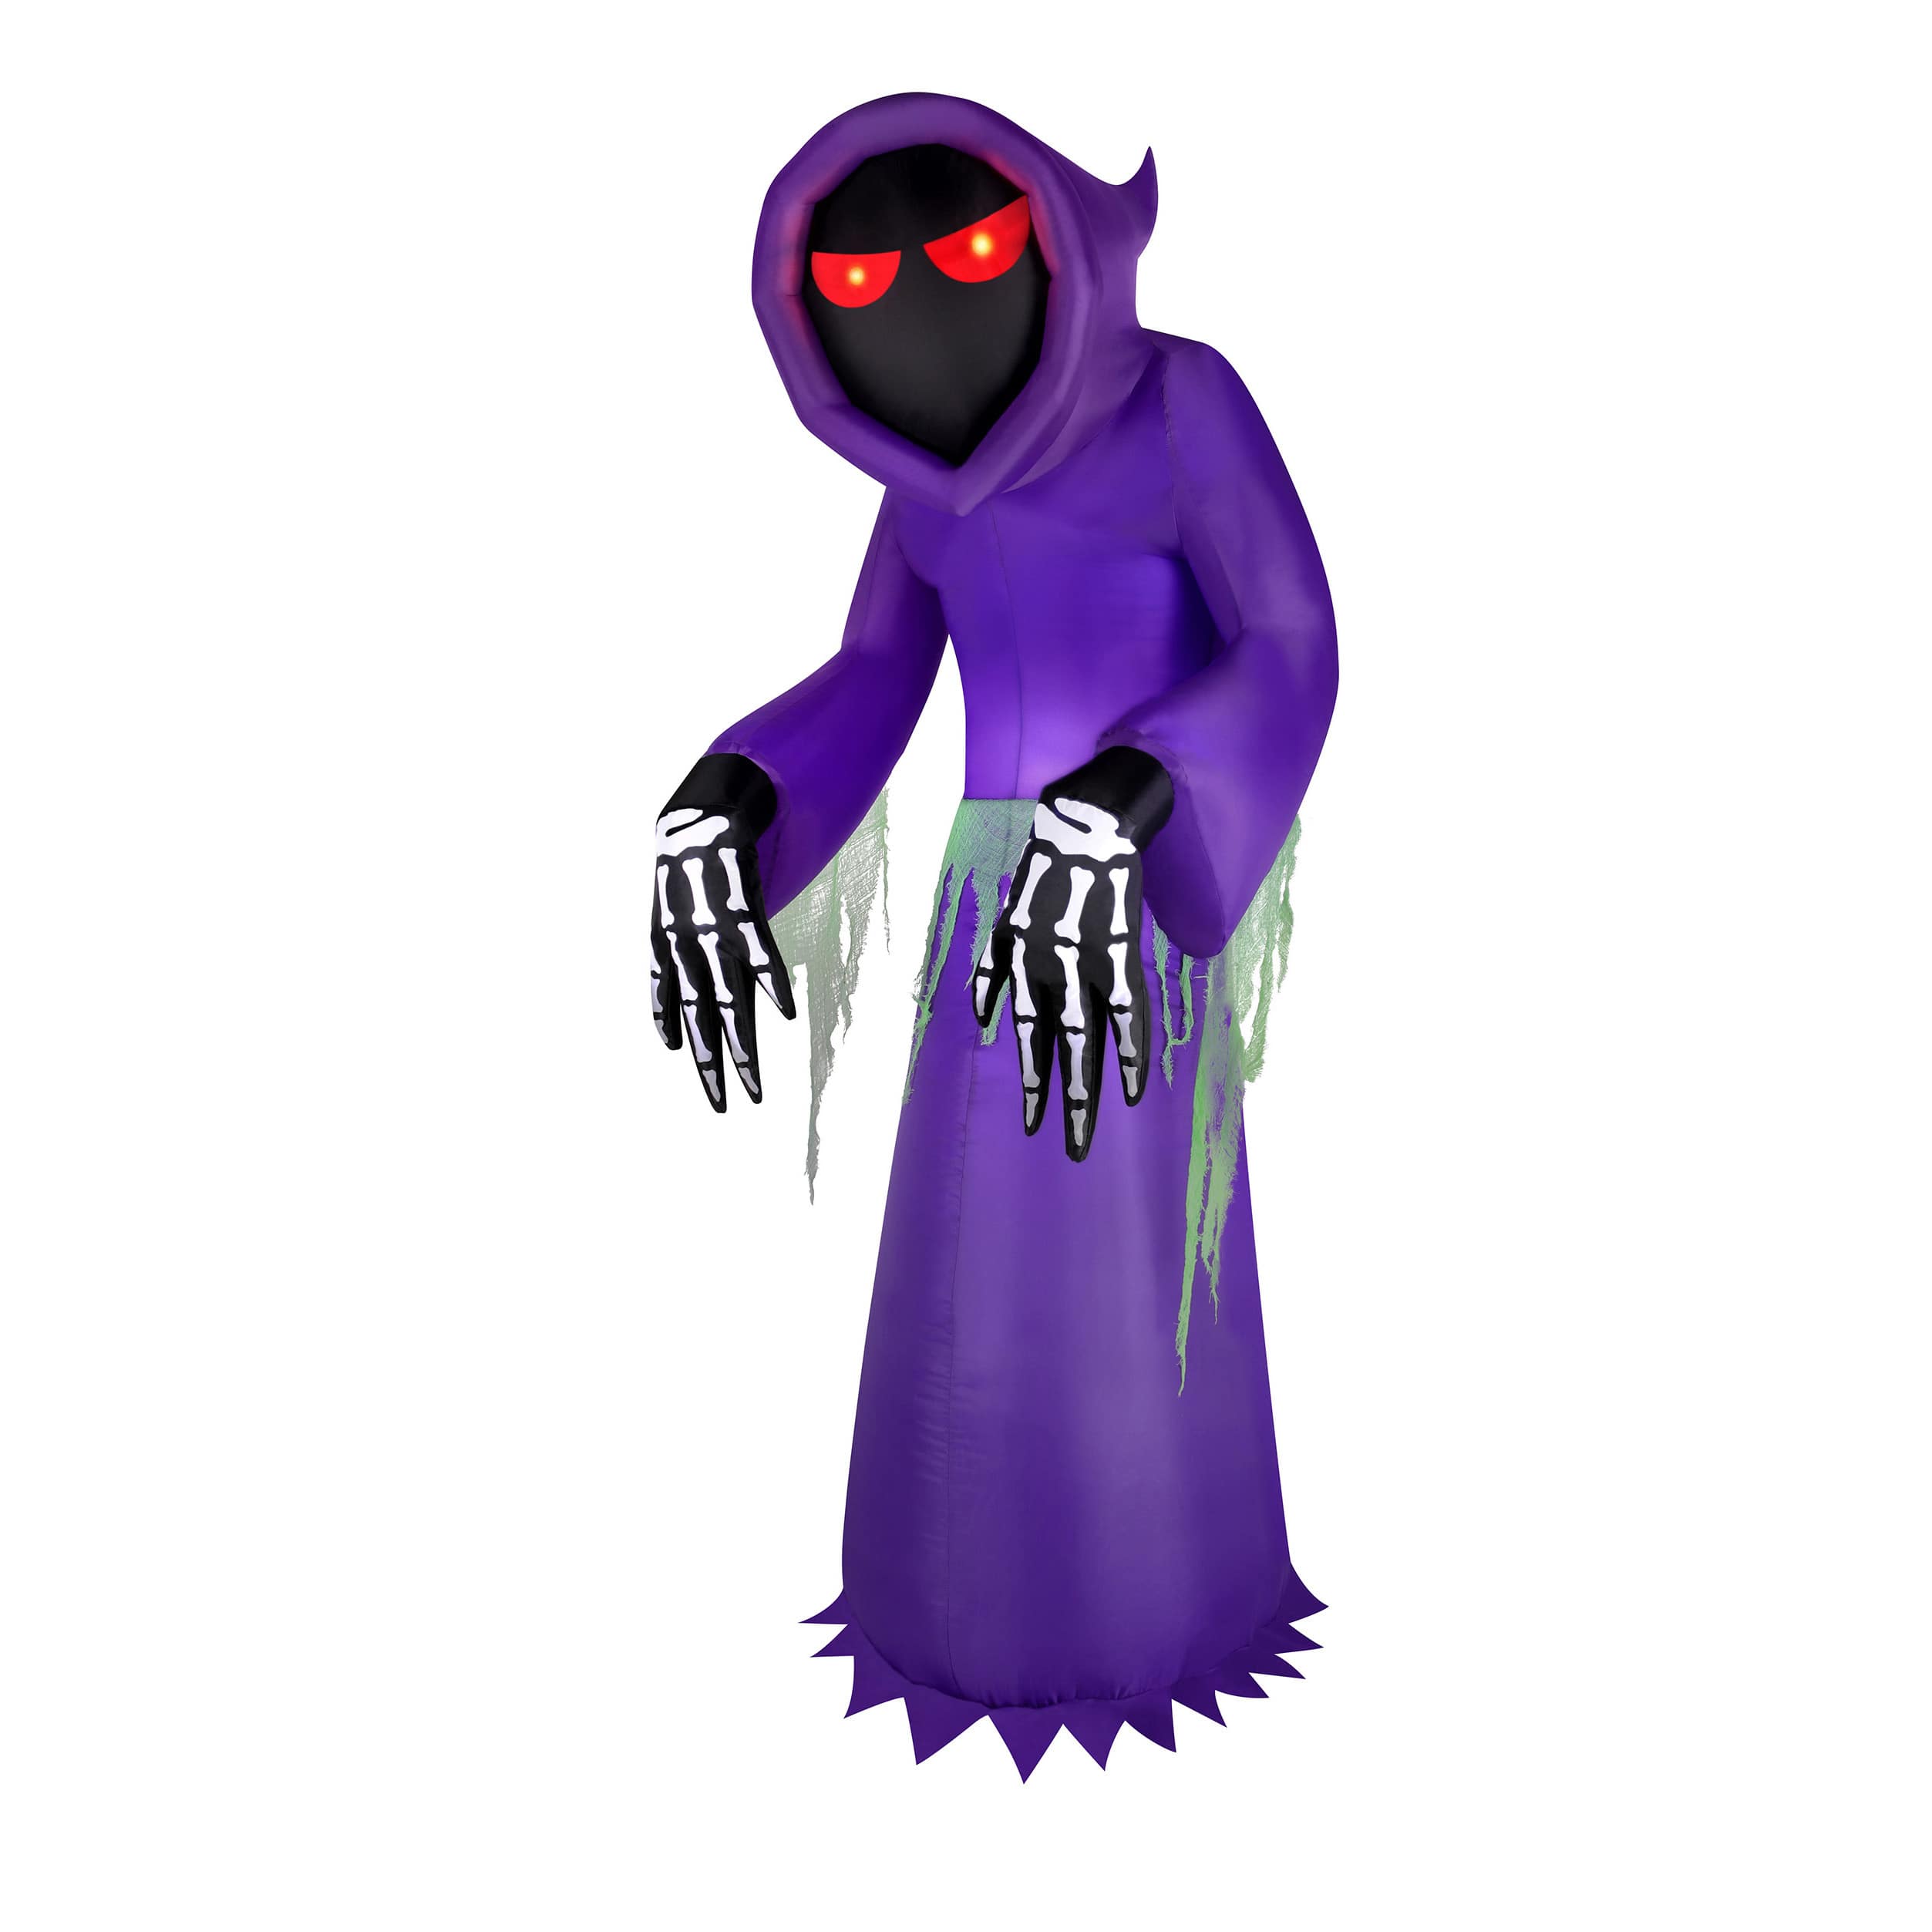 7ft. Airflowz Inflatable Halloween Faceless Reaper